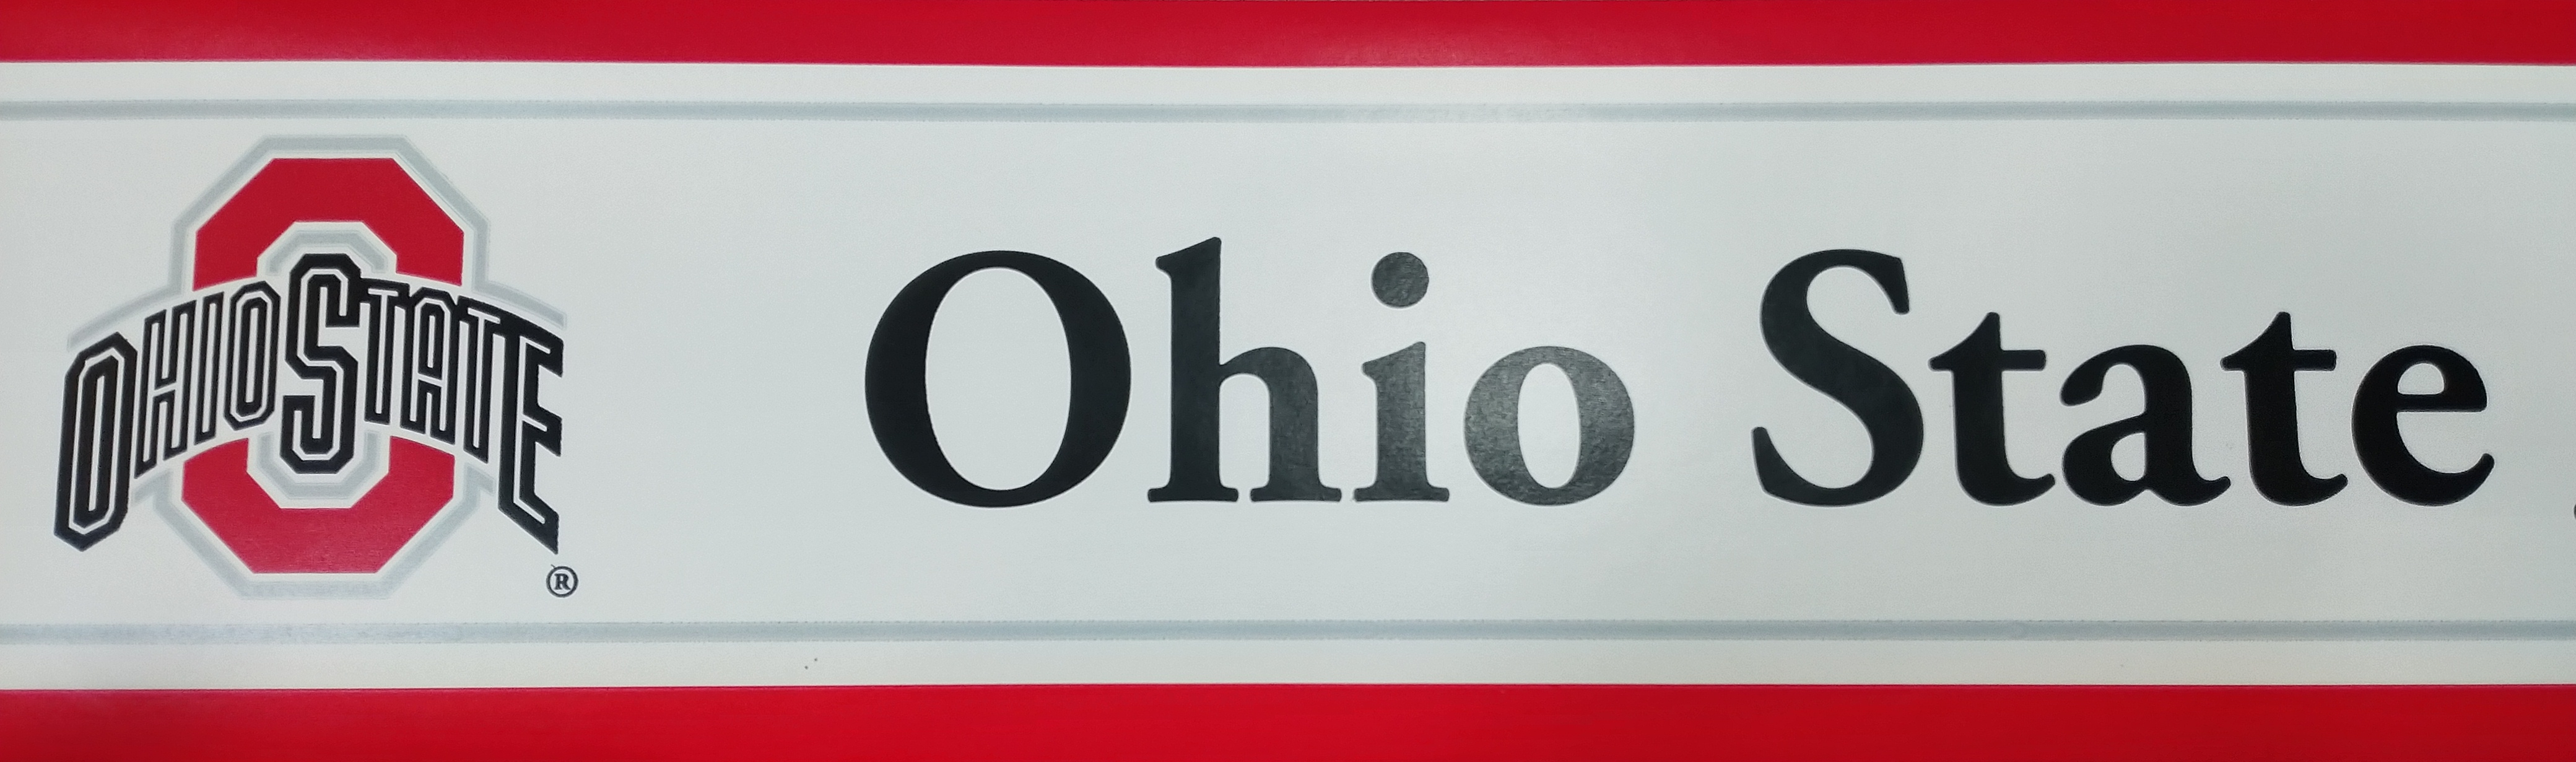 Ohio State Buckeyes - HD Wallpaper 